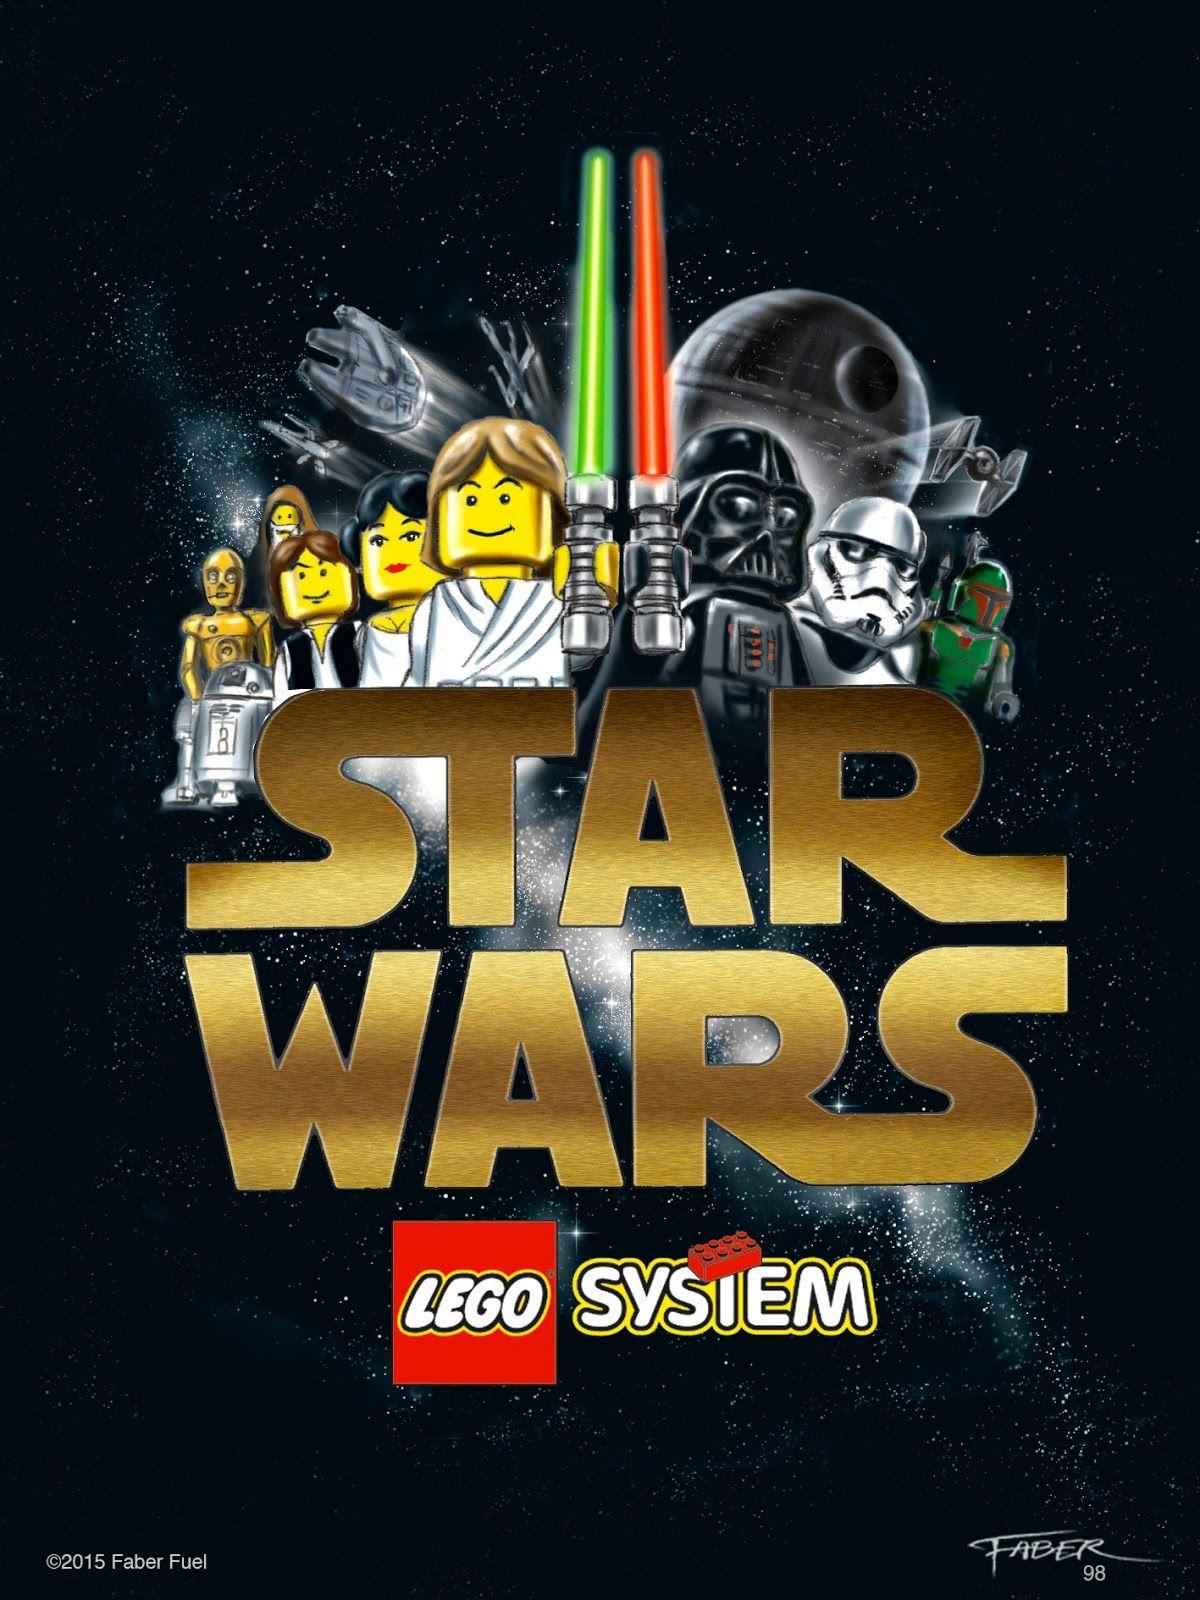 LEGO Star Wars Logo - Faber Files: Flashback LEGO and Star Wars collaboration